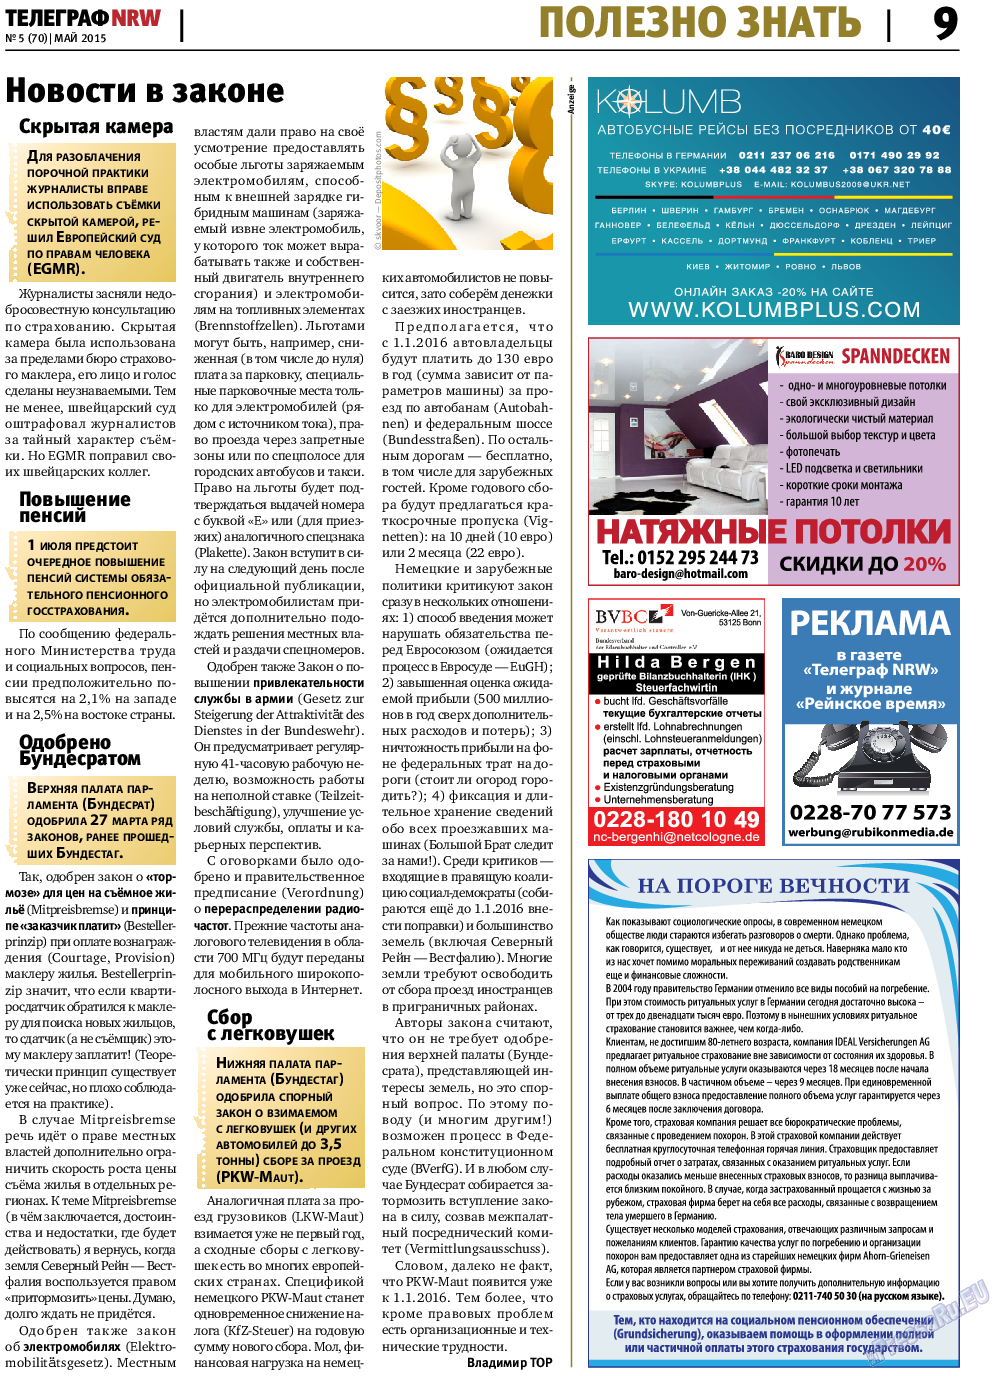 Телеграф NRW, газета. 2015 №5 стр.9